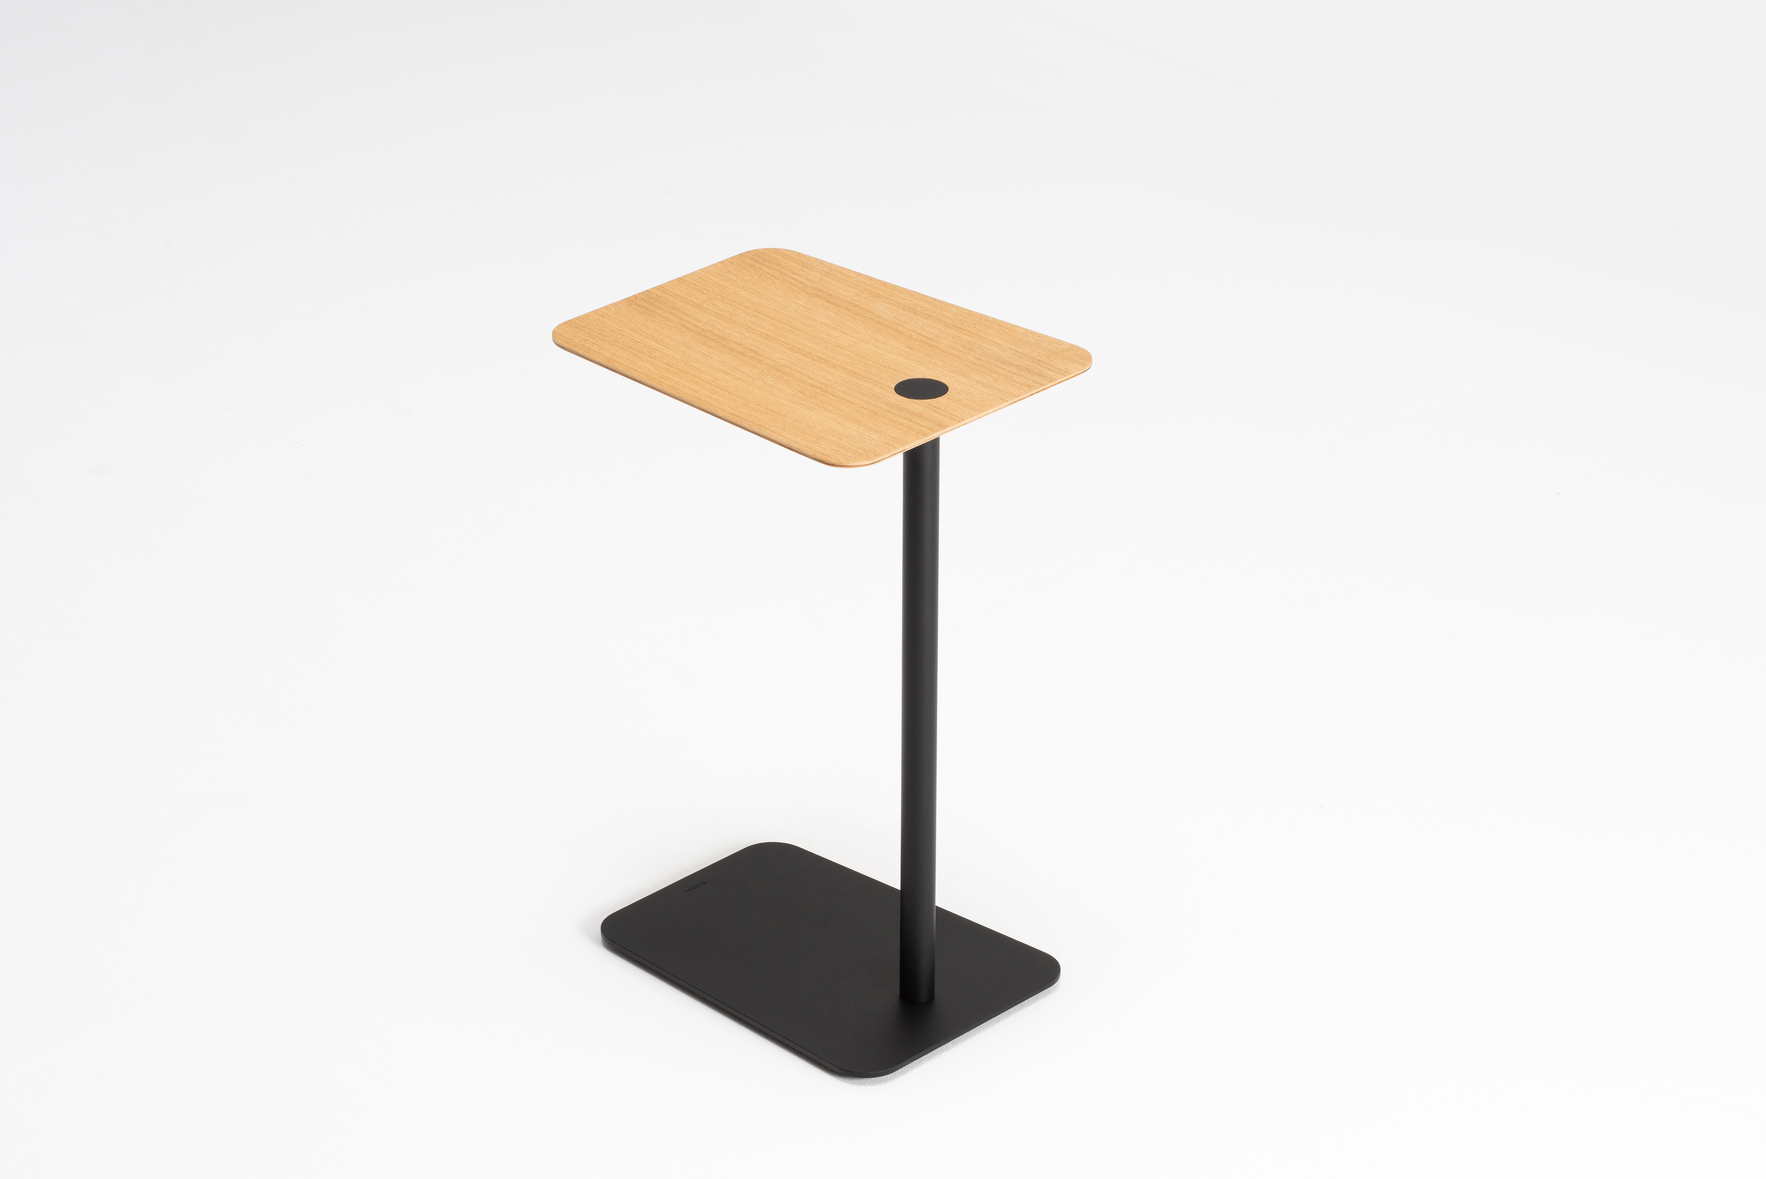 loop-side-table-veneer-oak-natural-lacquer-lua468-powder-coated-steel-black-matte-9005-1